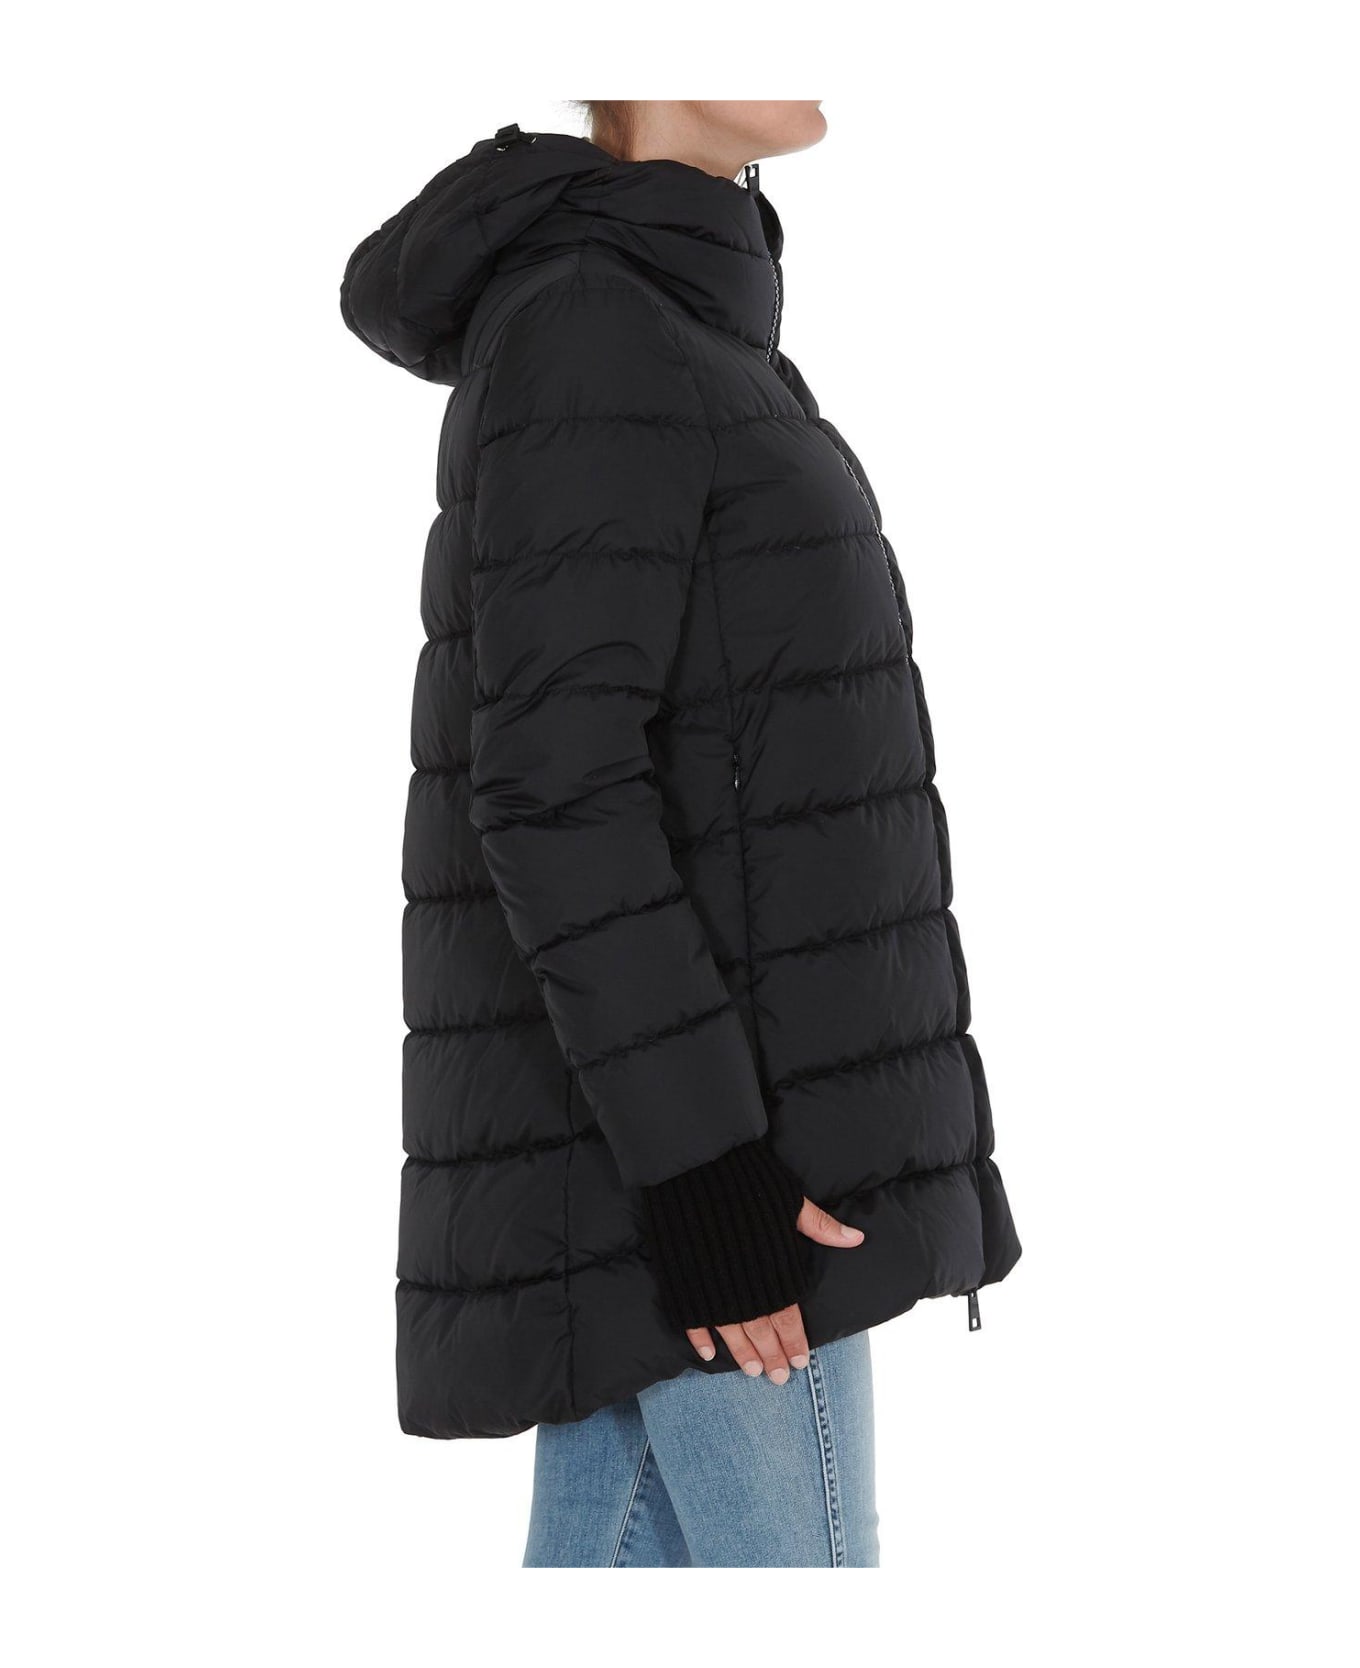 Herno Hooded Zip-up Puffer Jacket - Black